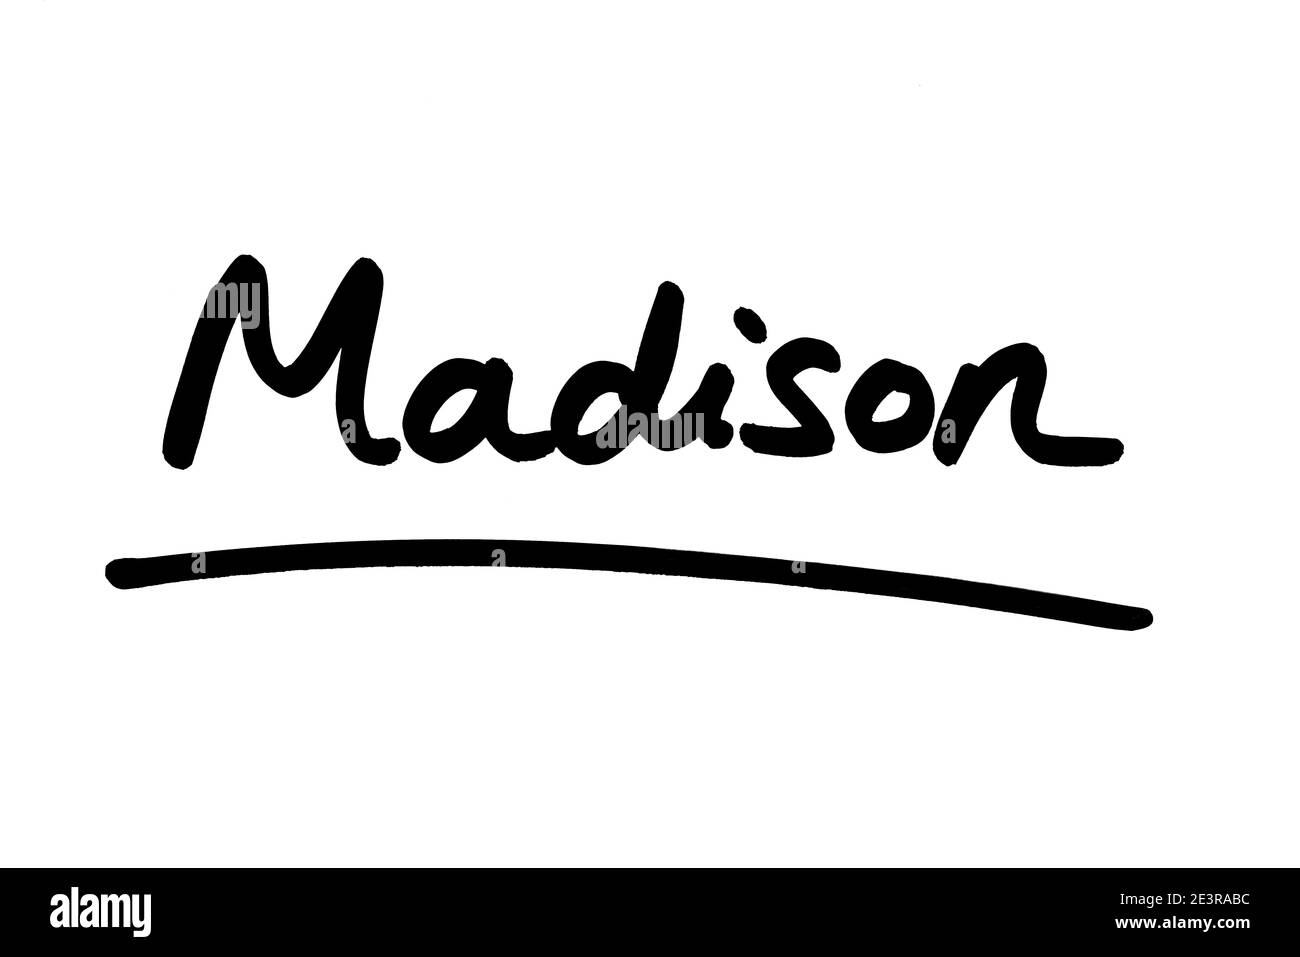 Madison - die Hauptstadt des Staates Wisconsin in den Vereinigten Staaten von Amerika. Stockfoto